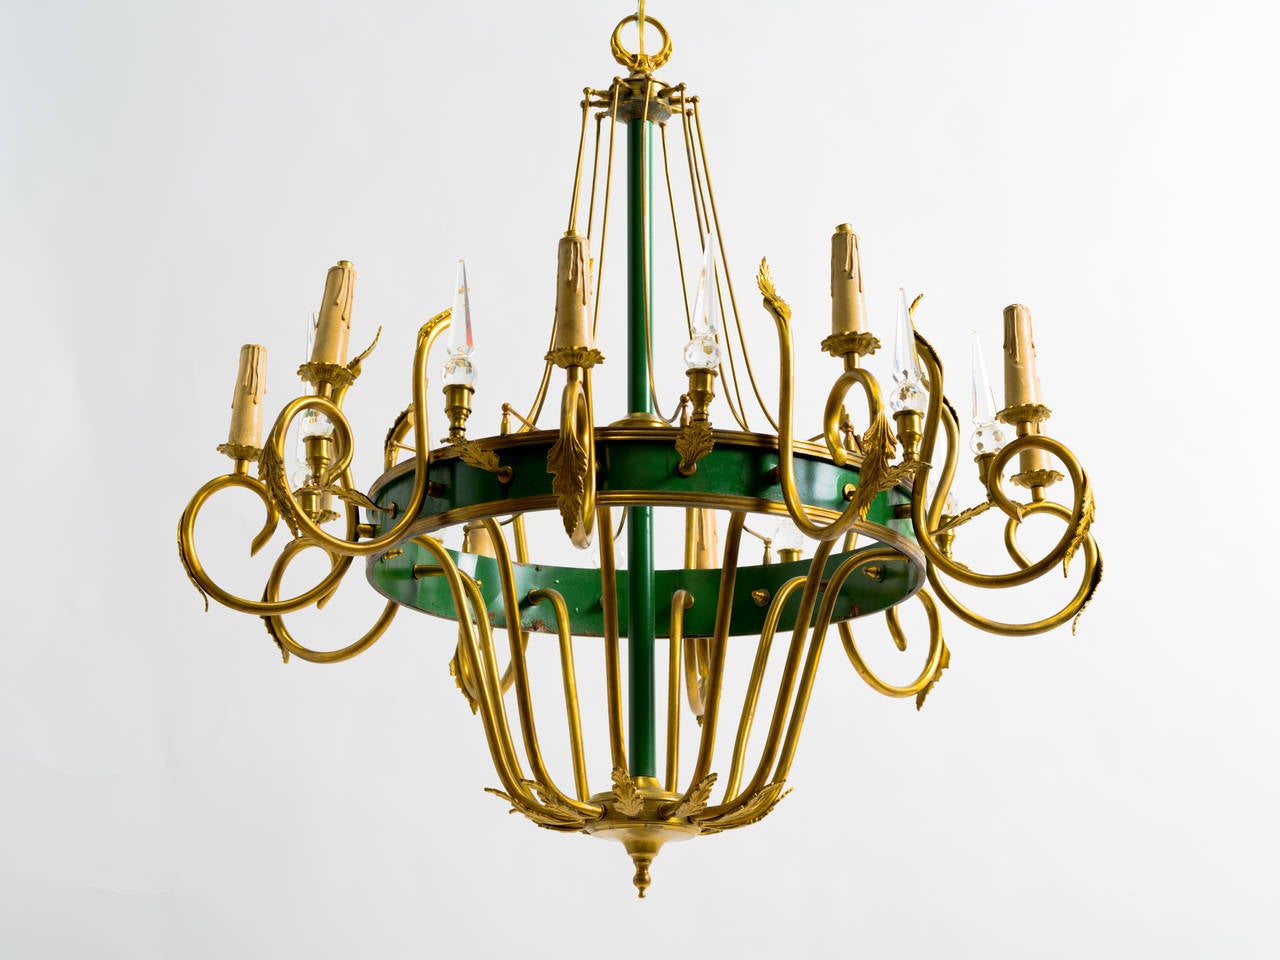 French Empire ten-light chandelier.